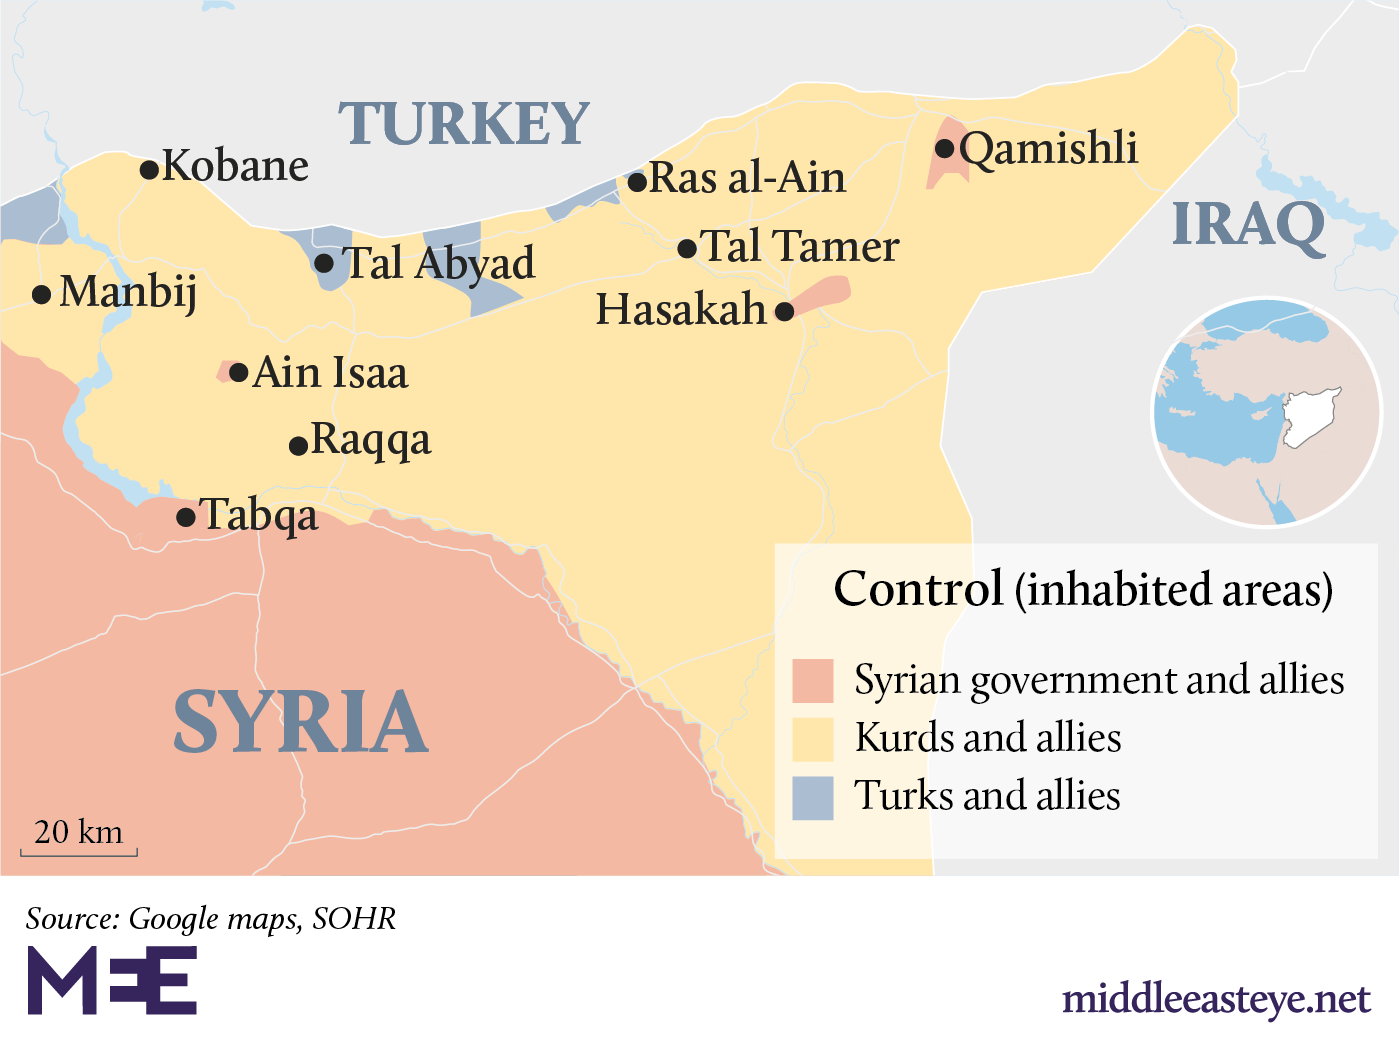 Who controls where northeast Syria